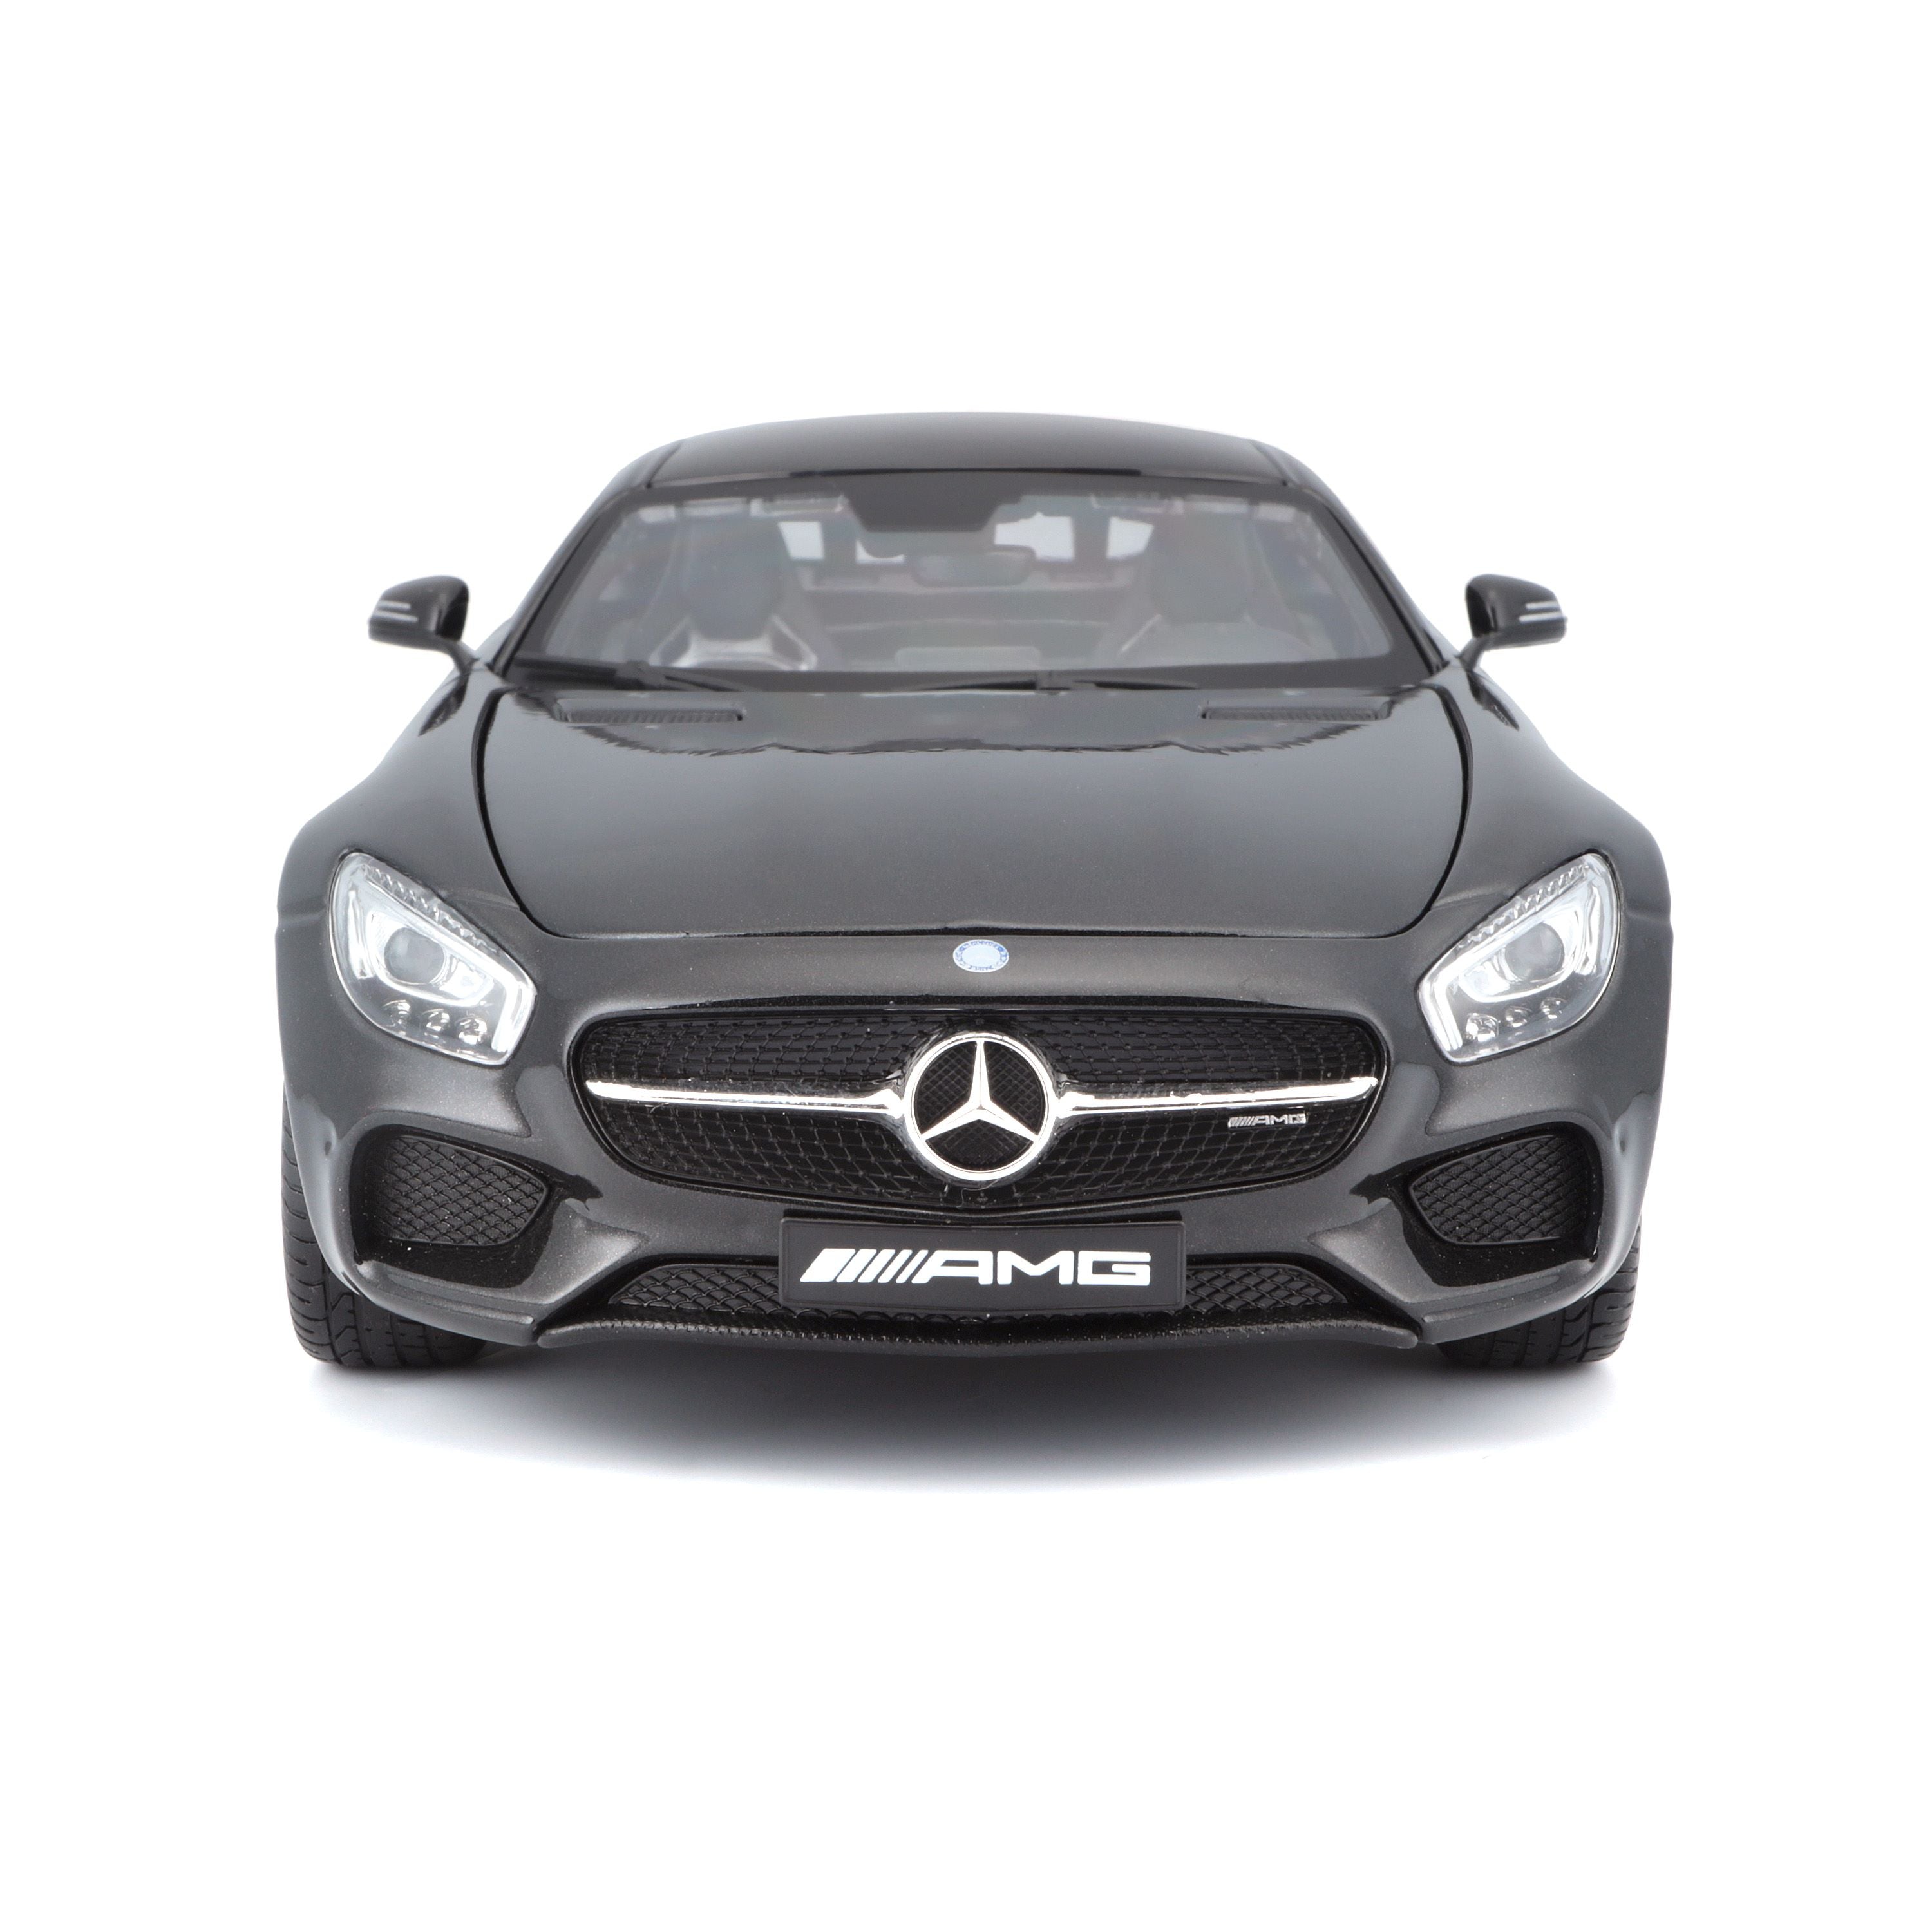 10-31398 - Bburago Maisto - 1:18 - Mercedes-Benz AMG GT - Nera Metallizzata